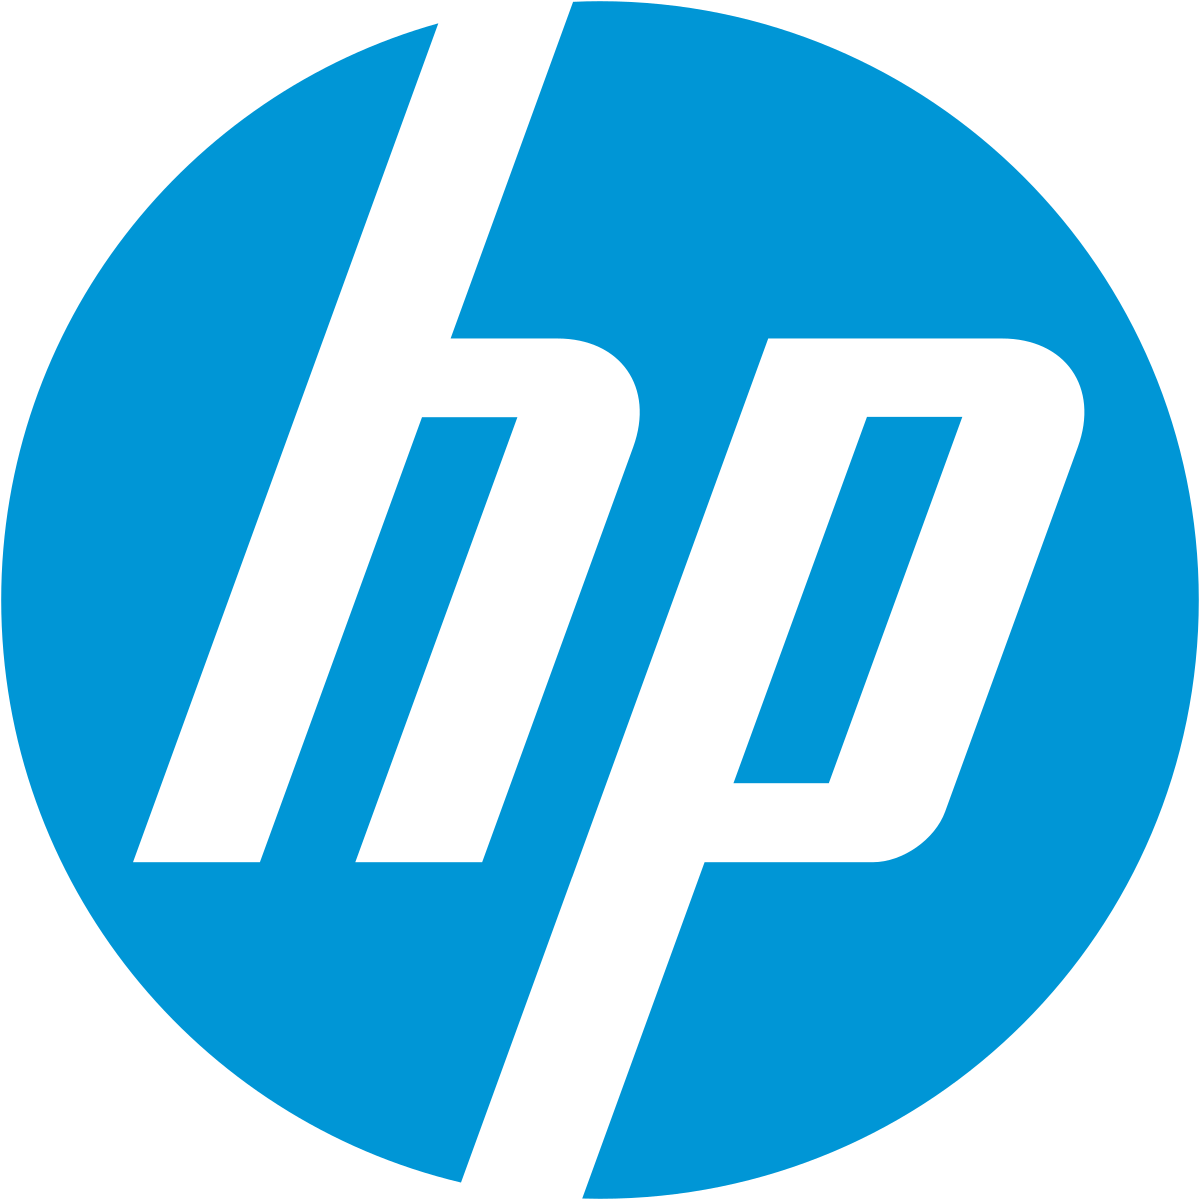 HP Cloud Logo - HP Cloud